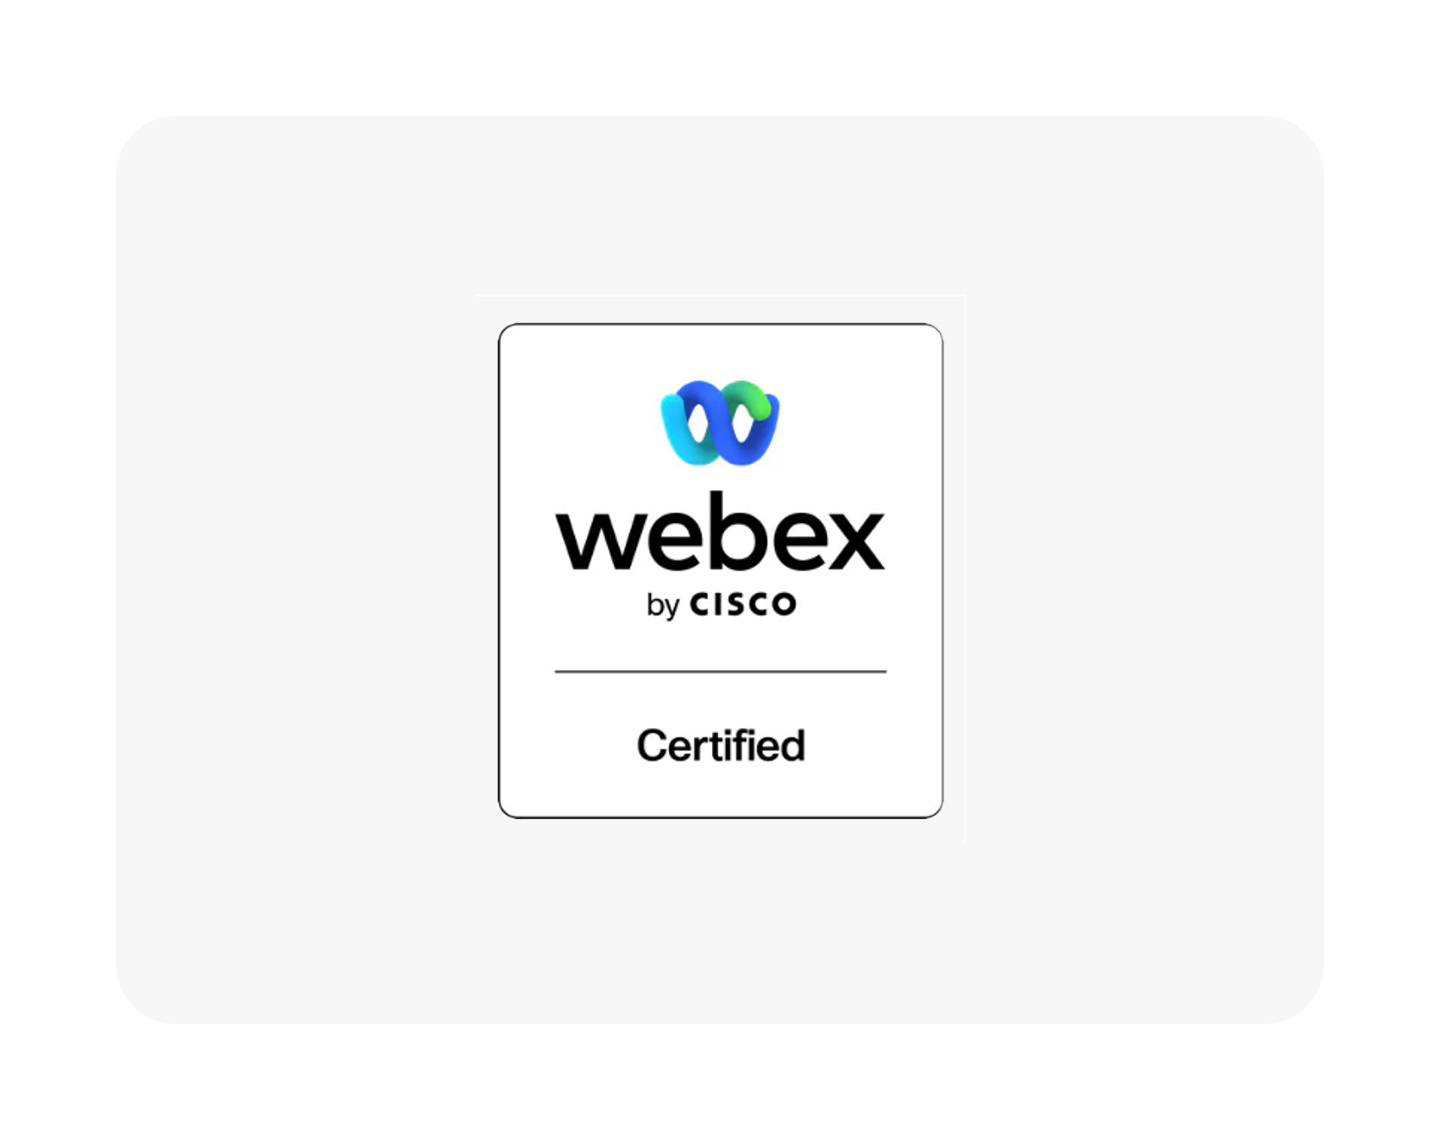 Cisco Webex® sertifikalı